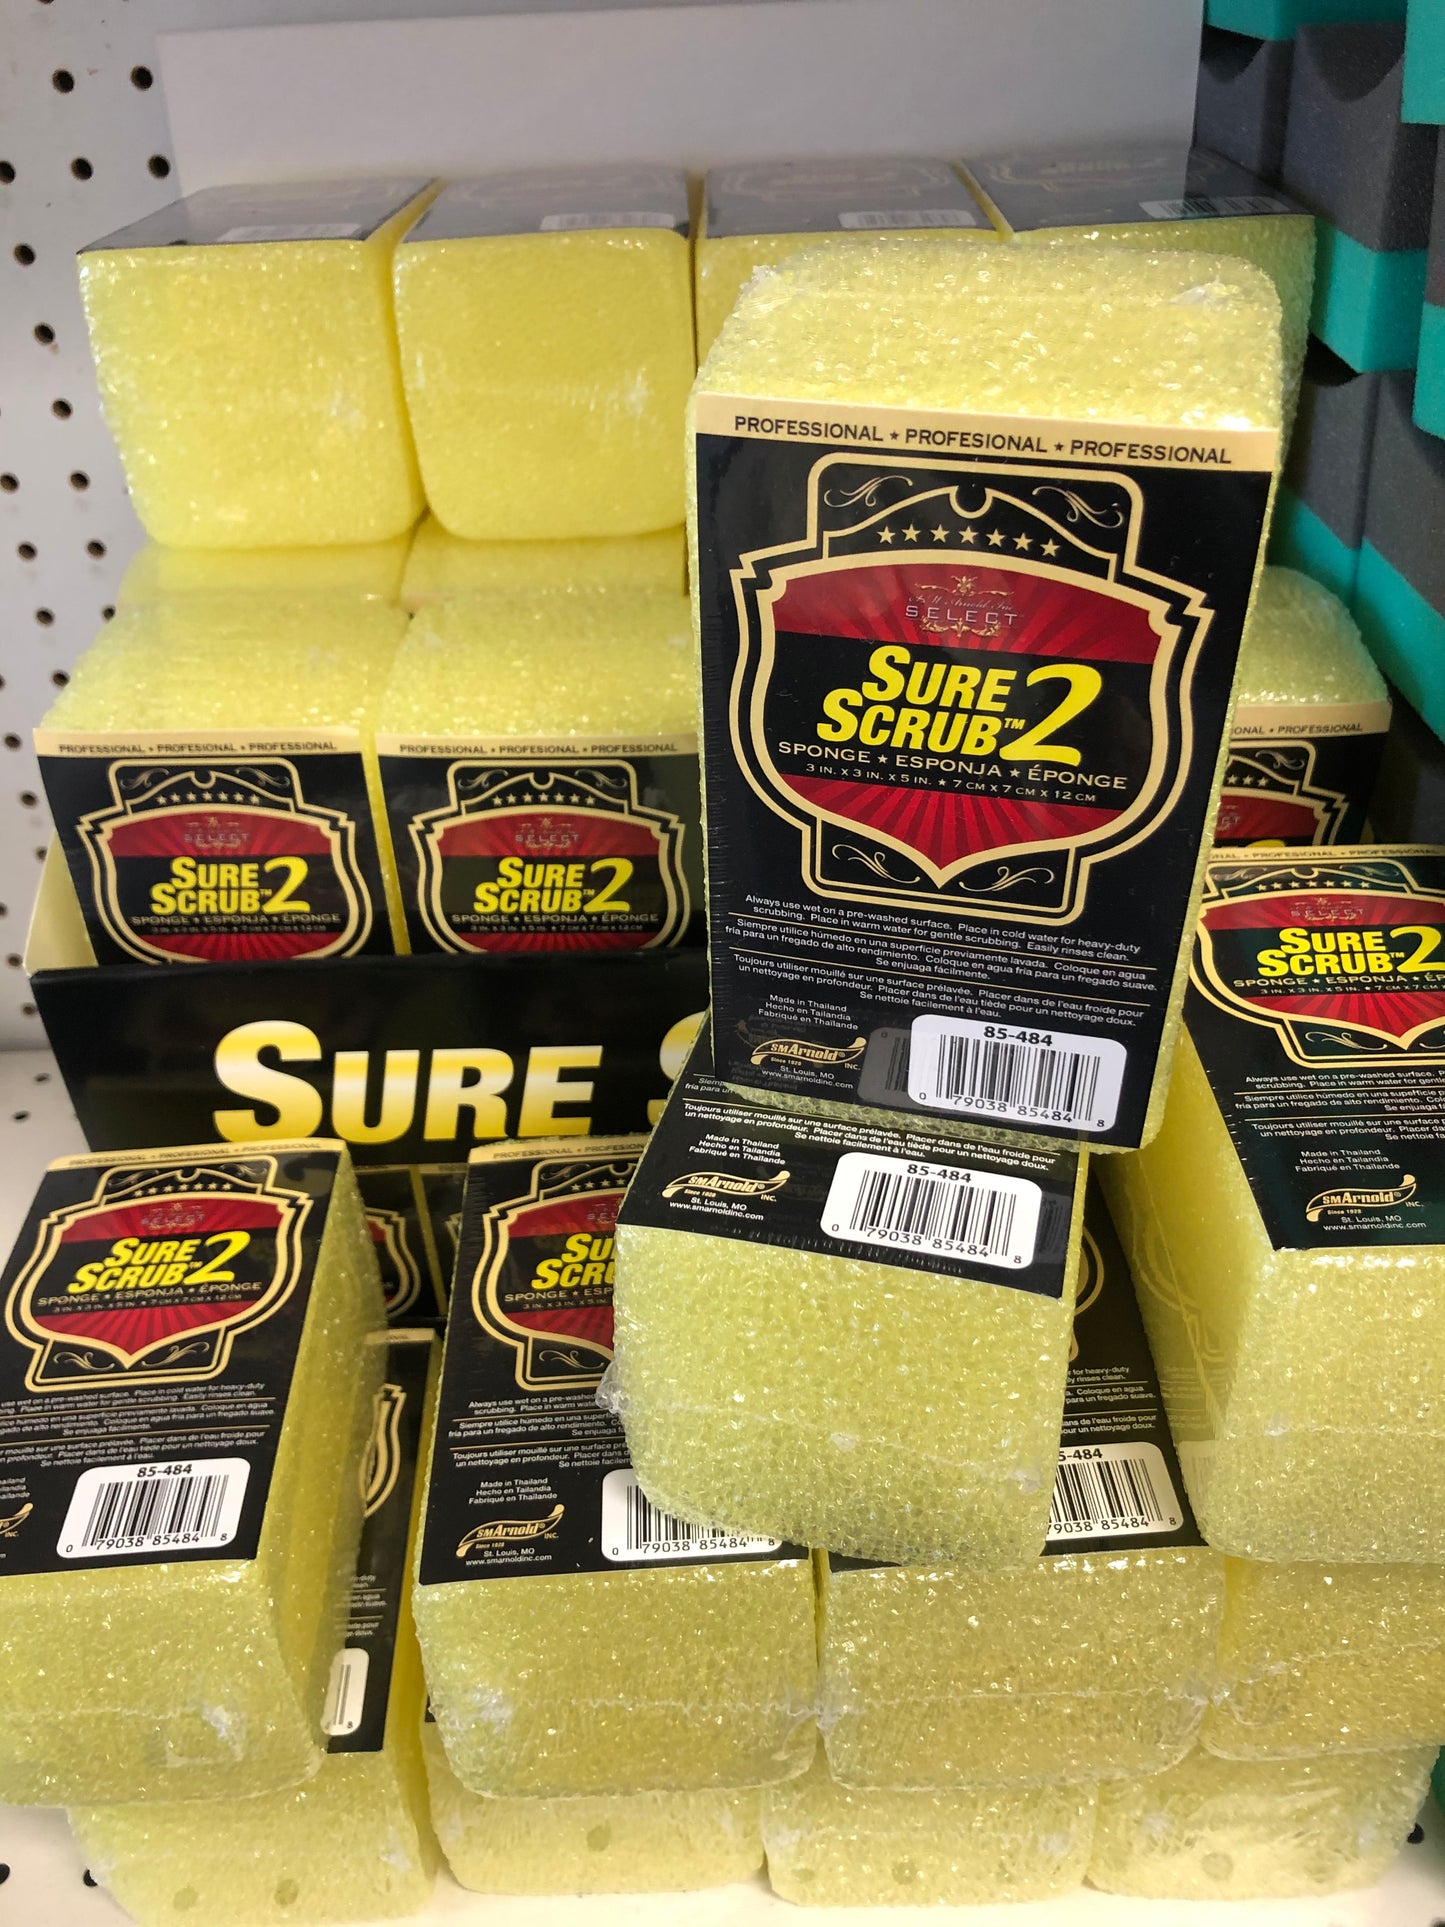 Sure Scrub Bug Sponge